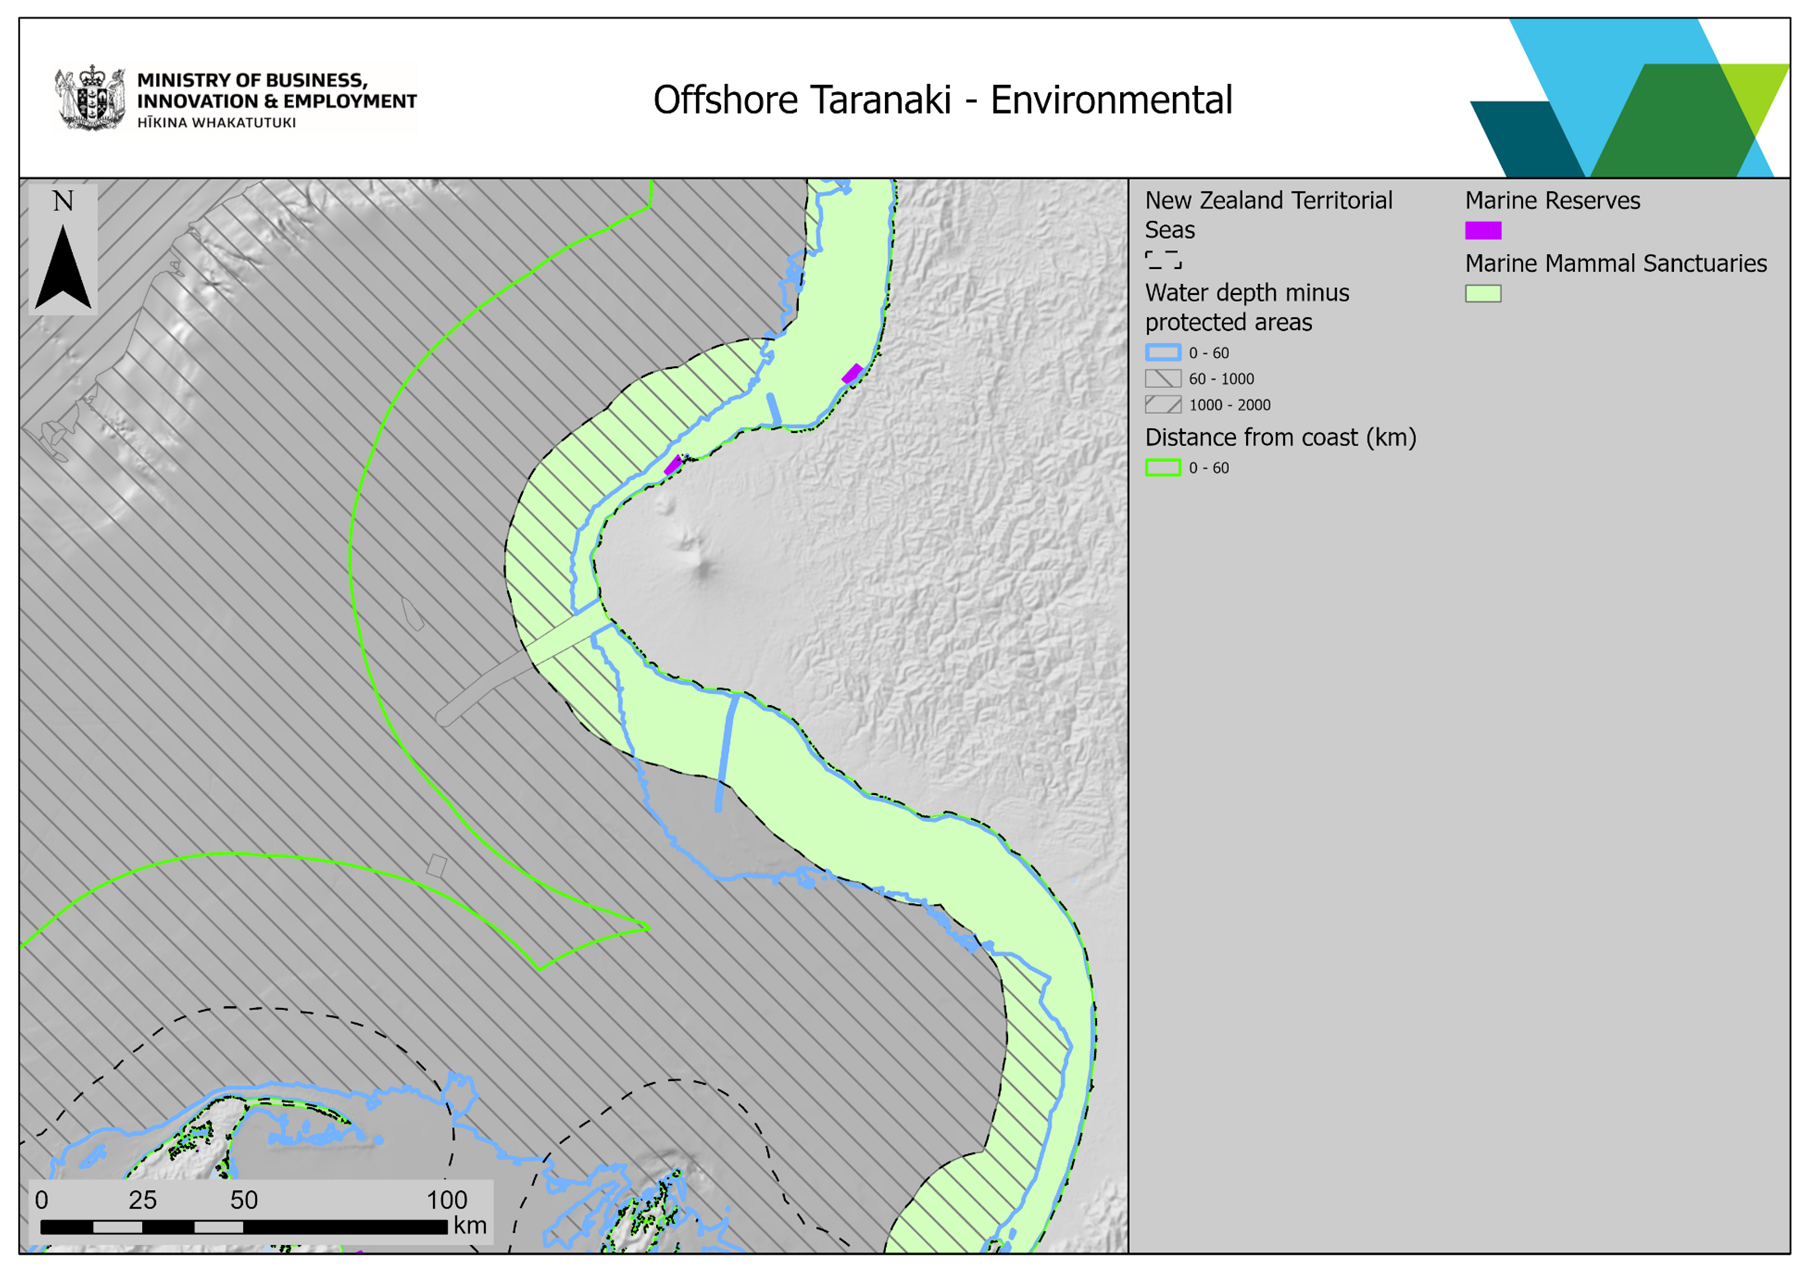 Annex5 offshore taranaki environmental